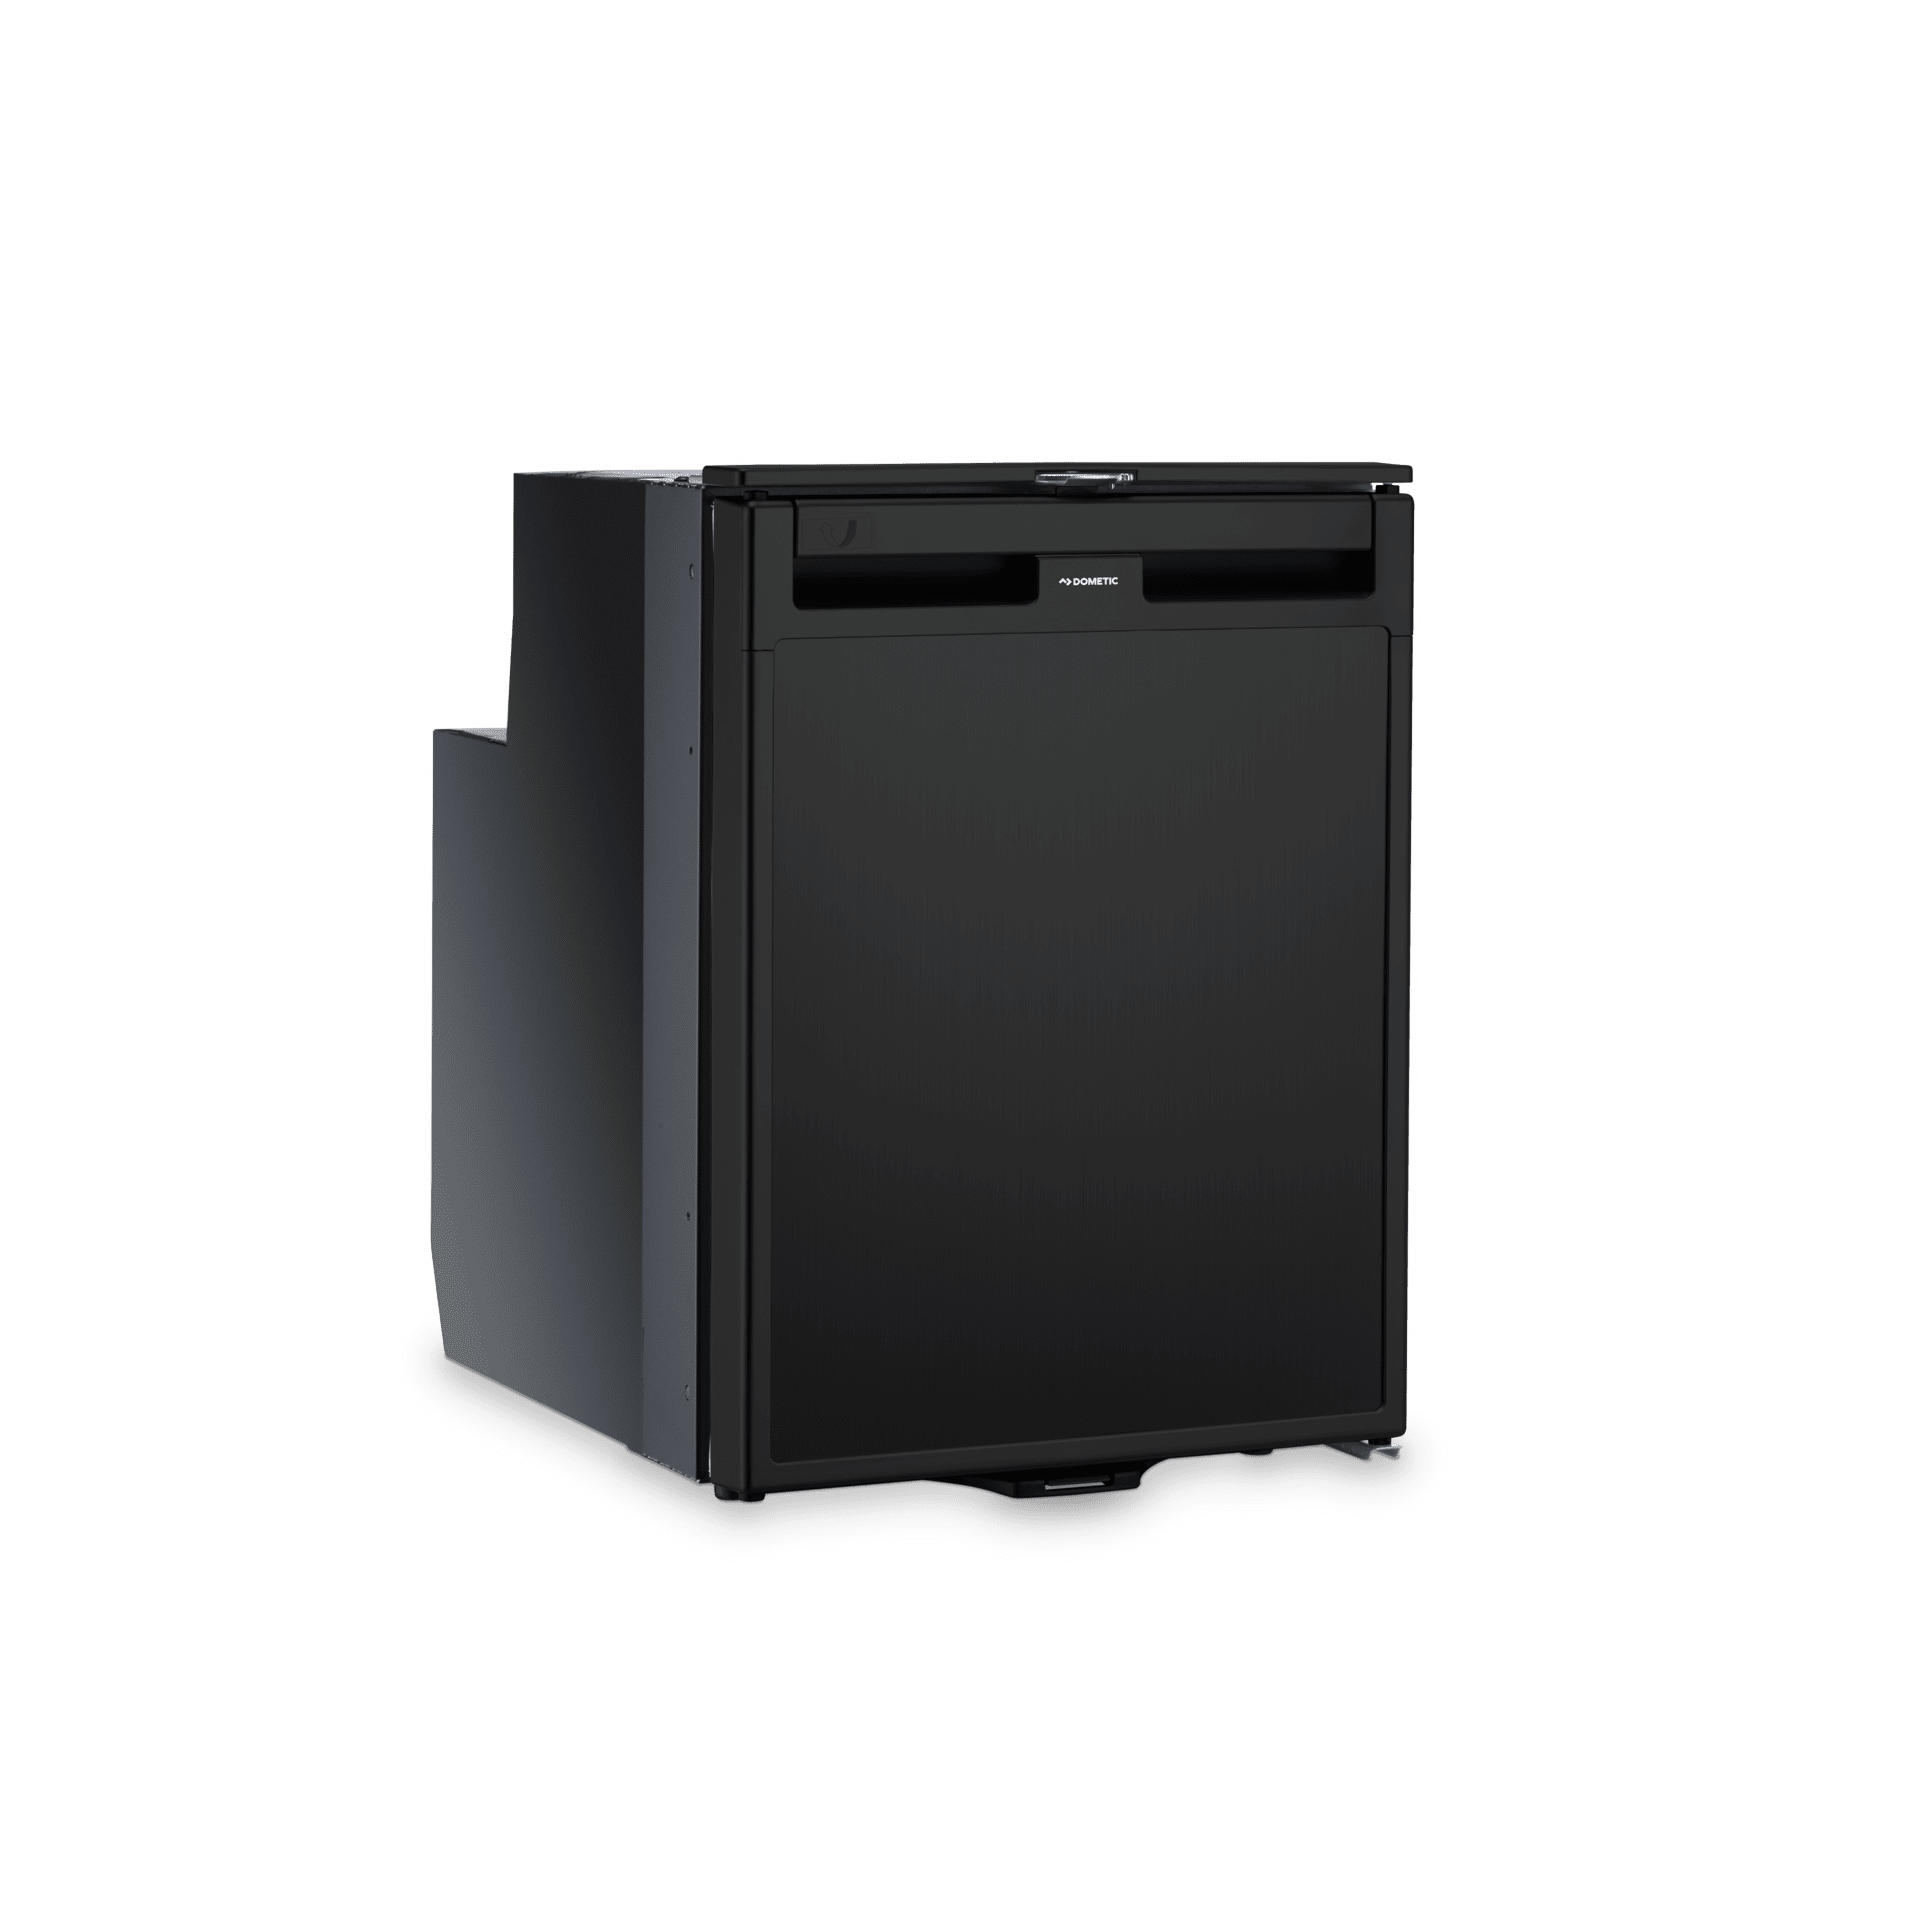 Marine Refrigerators, Compact, Durable, Quiet